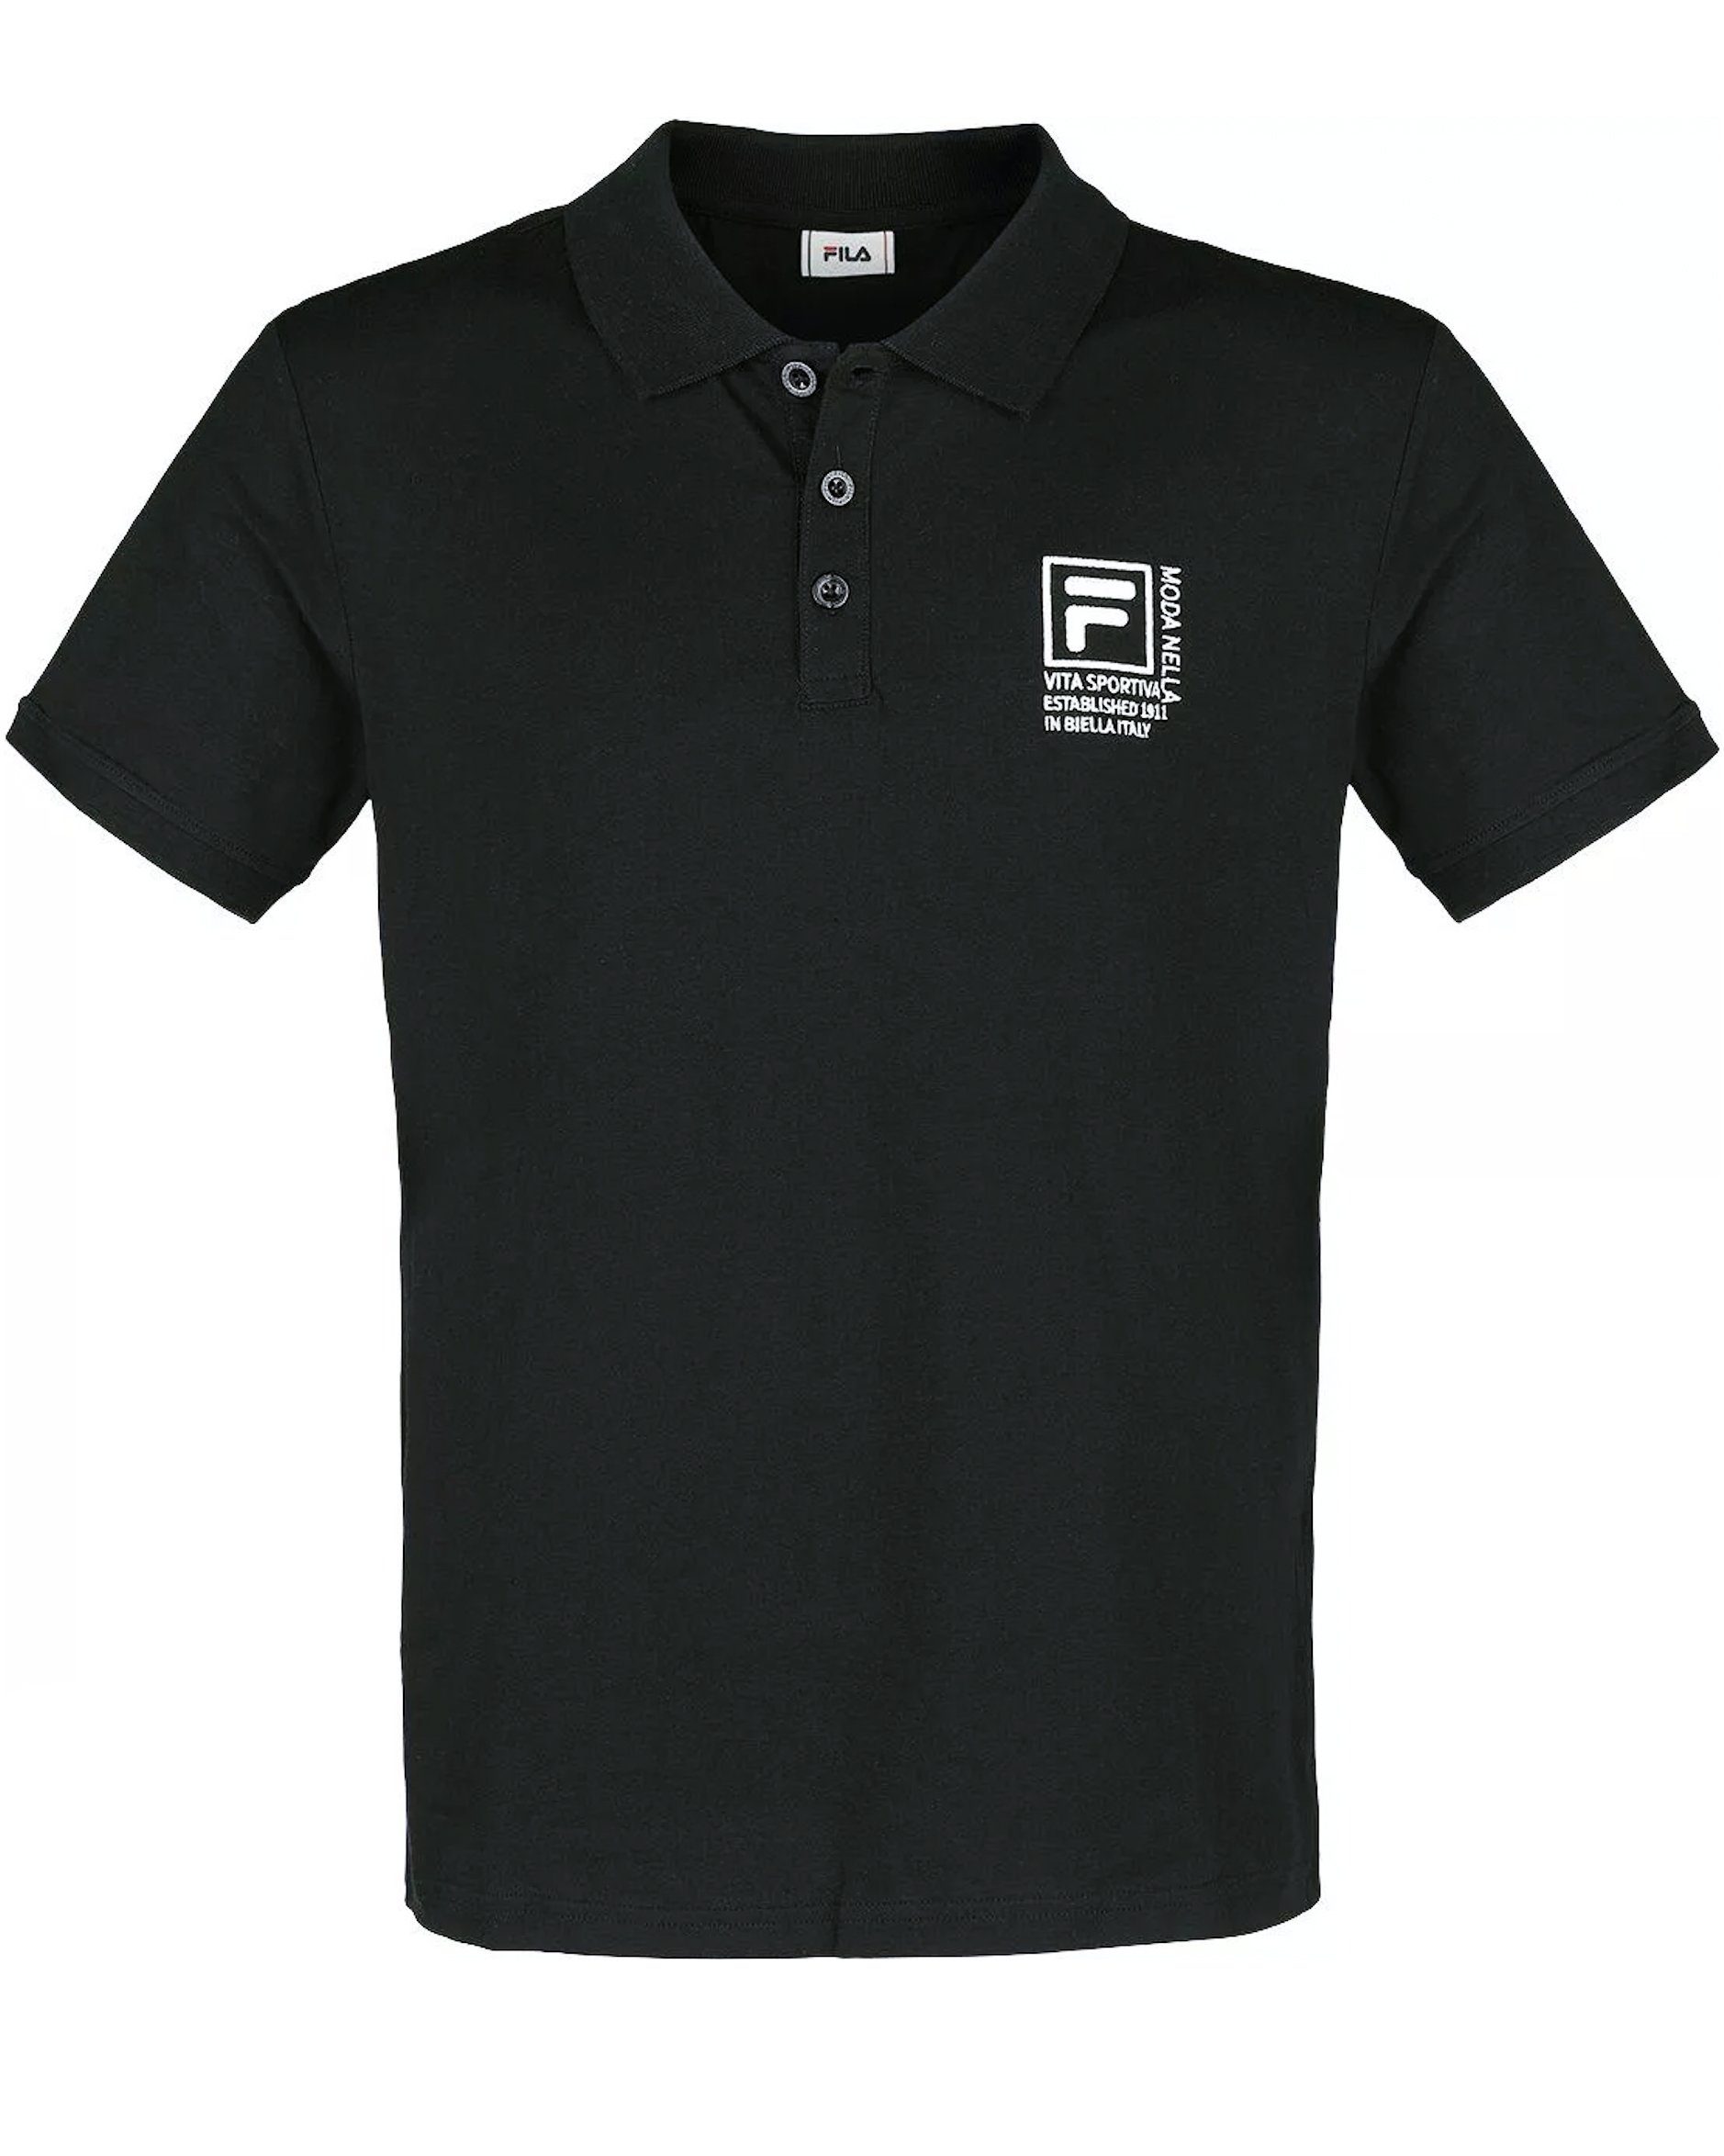 RIGG - Poloshirt Fila Schwarz Logo Kurzarm Shirt